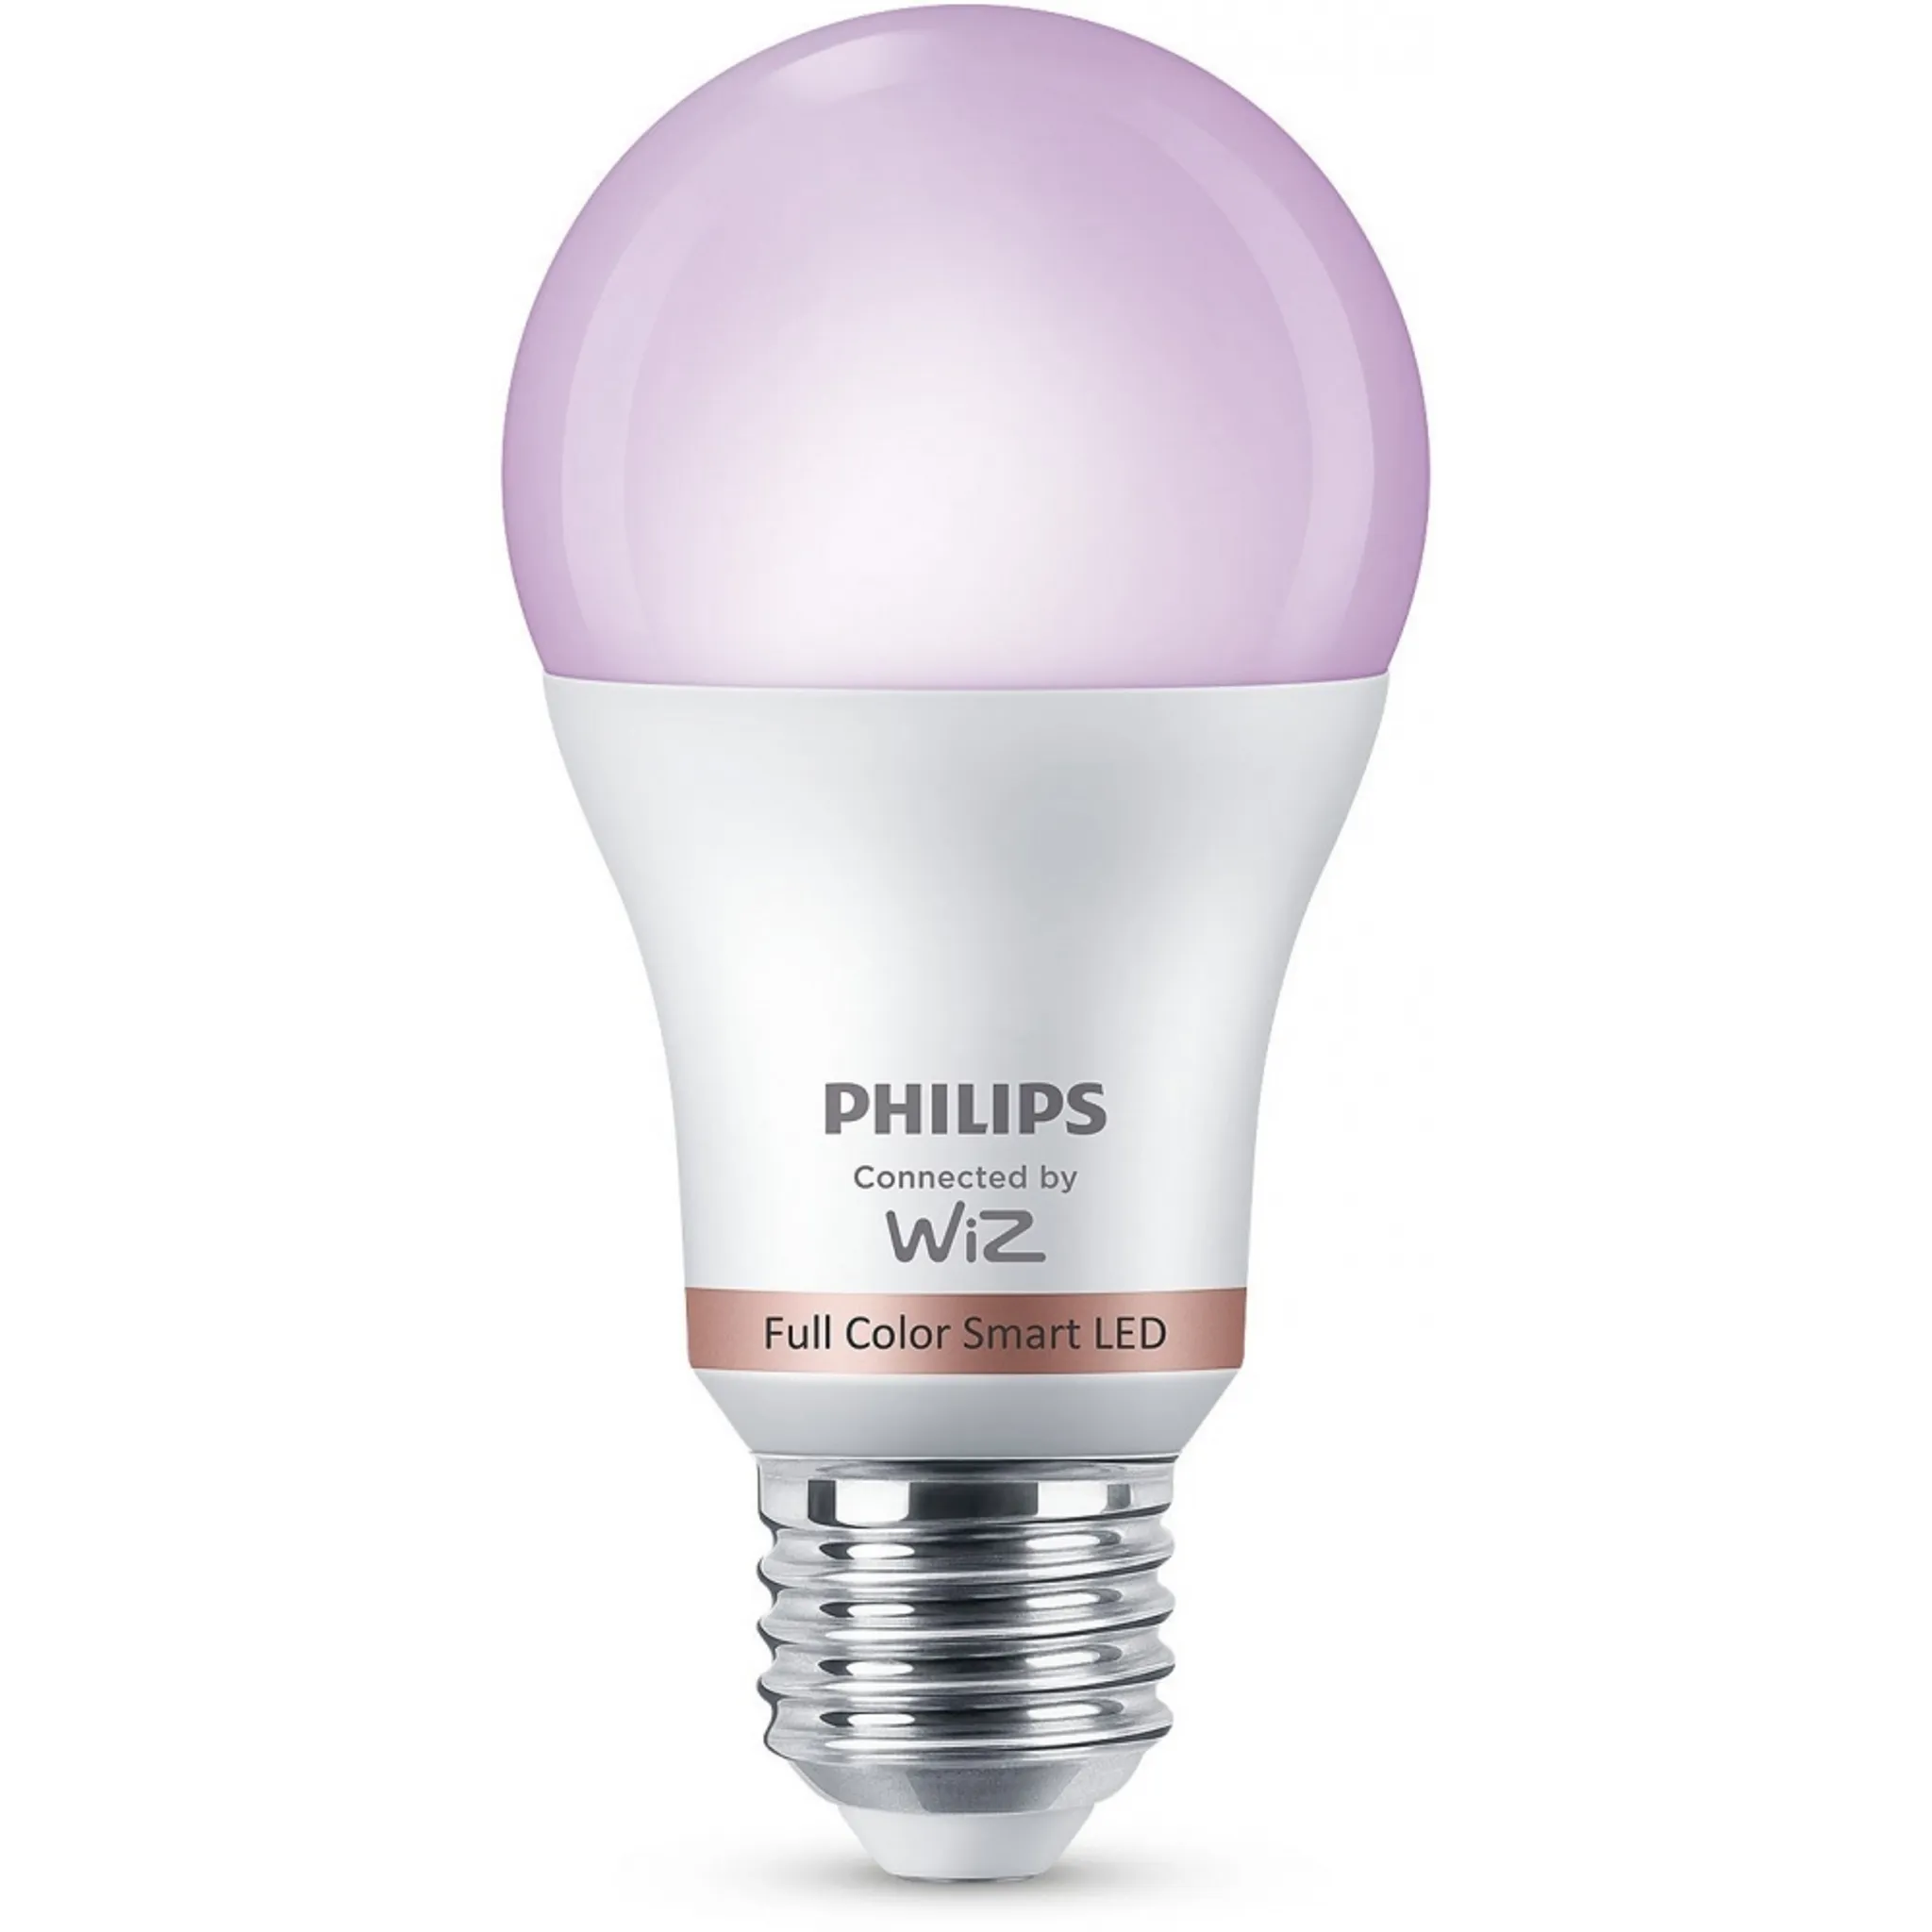 Philips WiZ Full Color Smart Deal